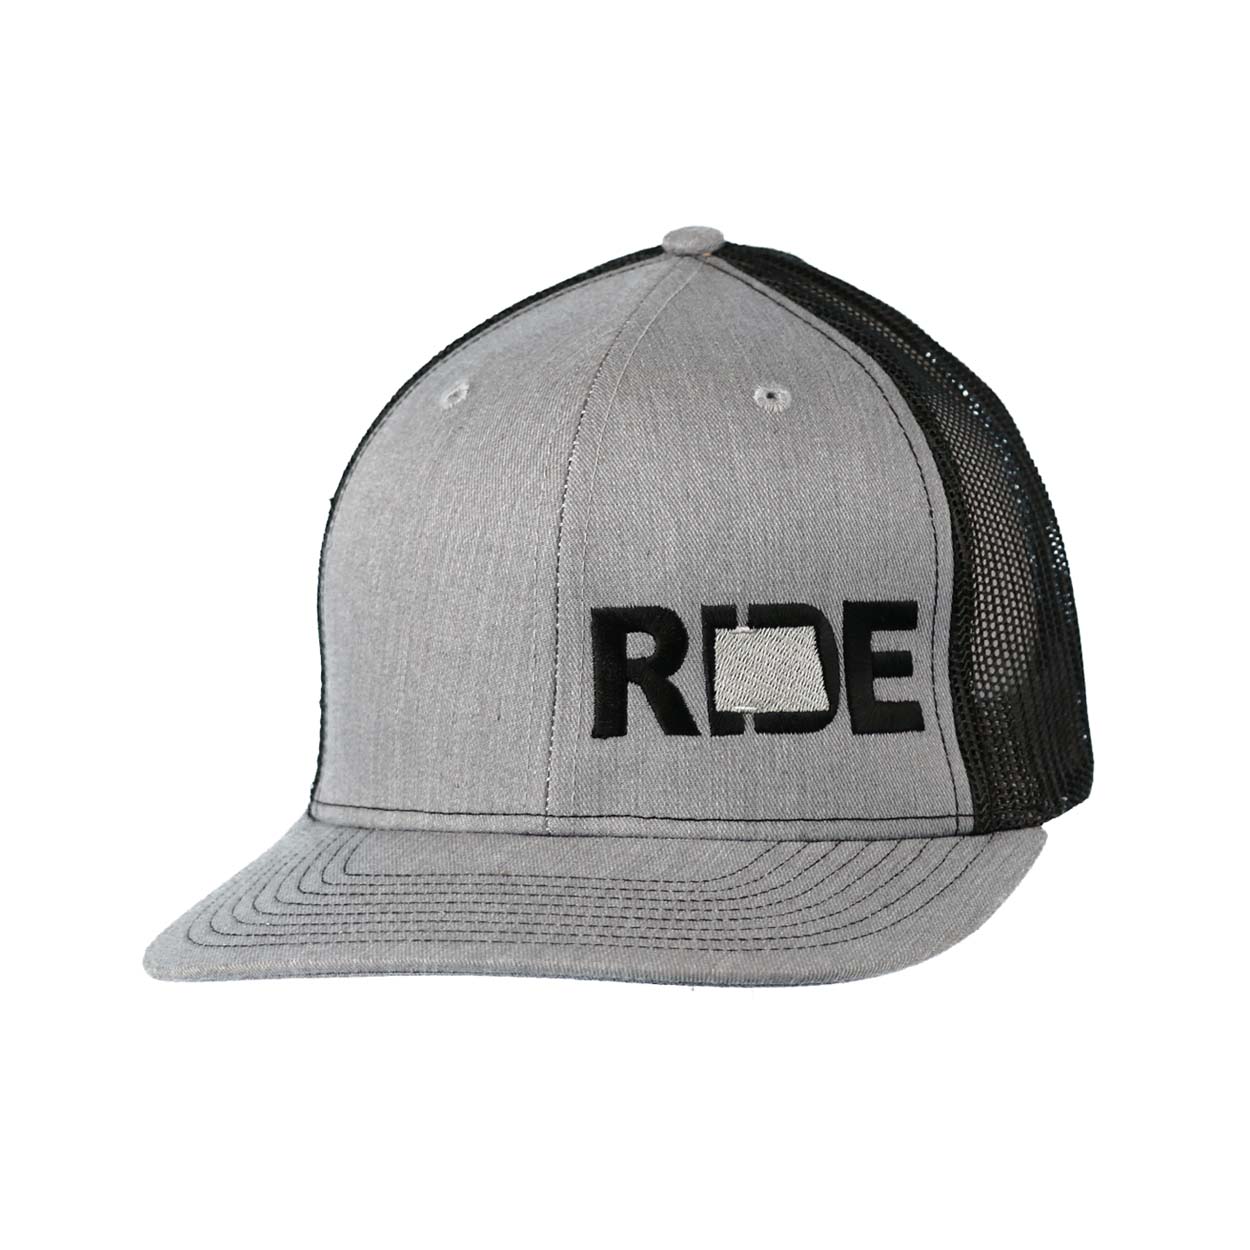 Ride North Dakota Night Out Embroidered Snapback Trucker Hat Heather Gray/Black